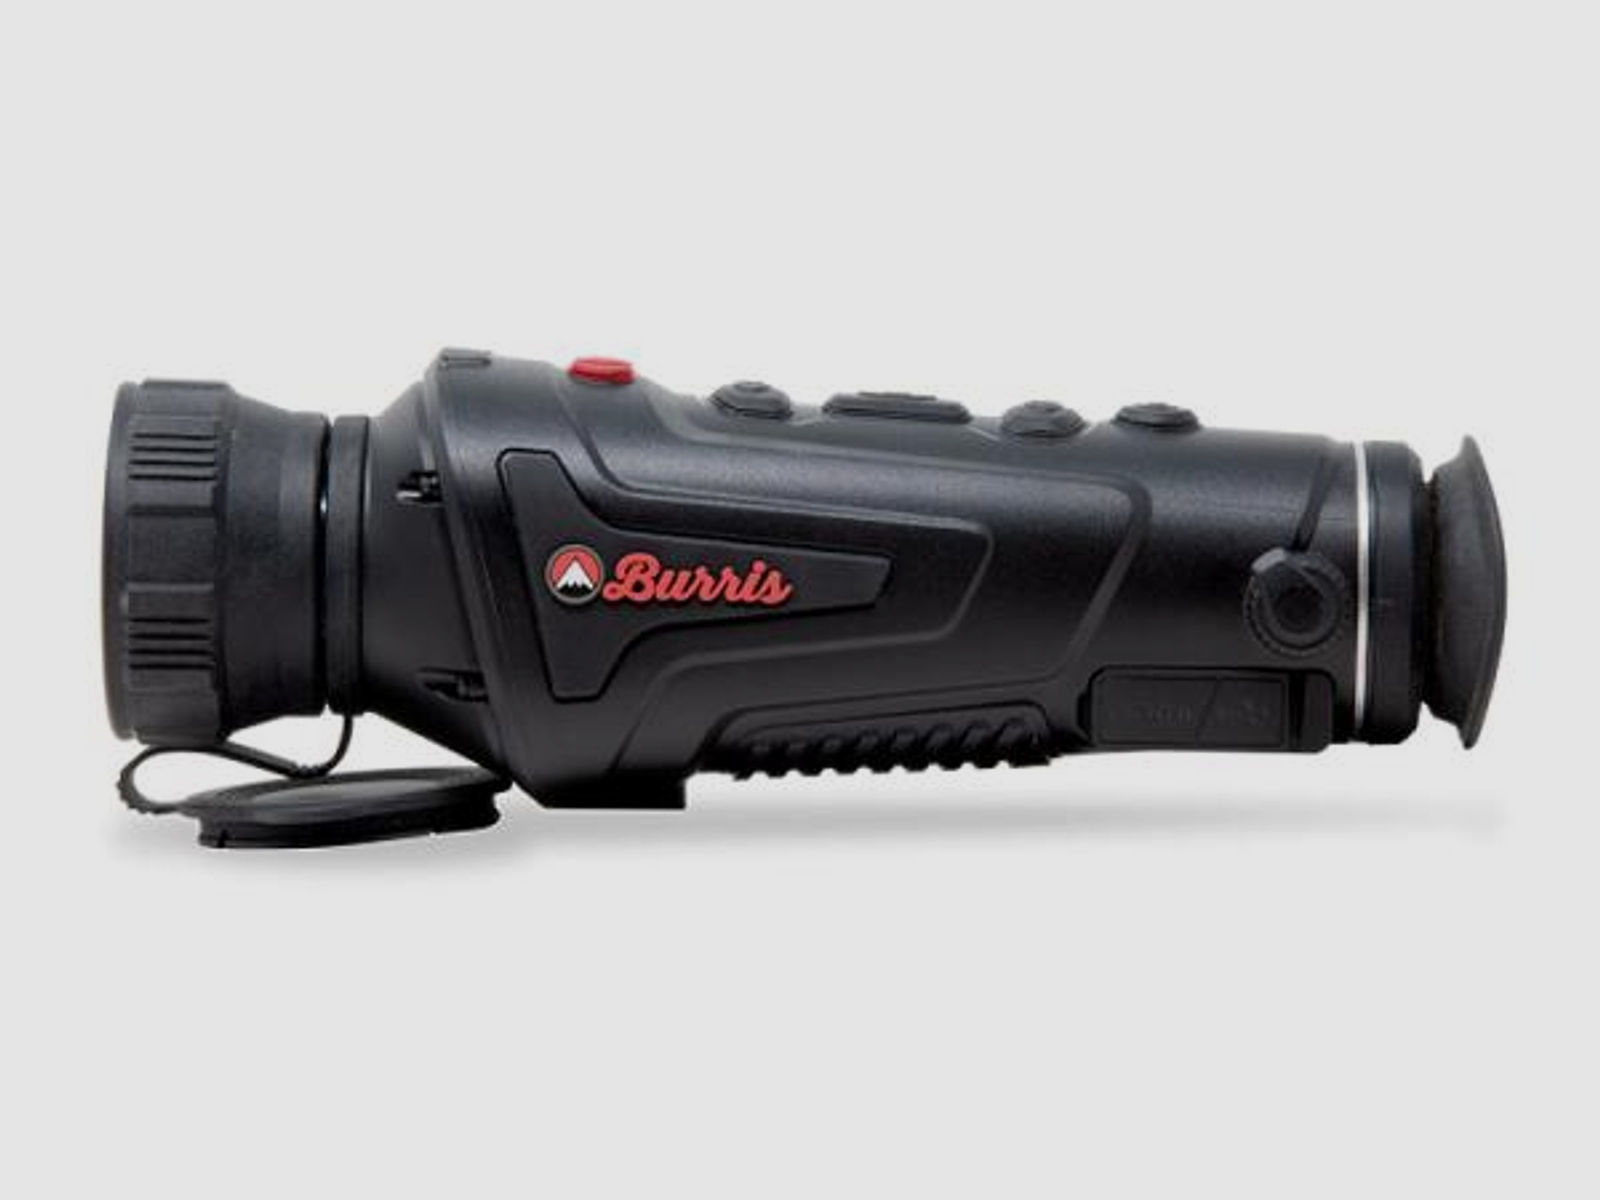 BURRIS Wärmebild-Kamera BTH 25 Thermal Handheld Monokular